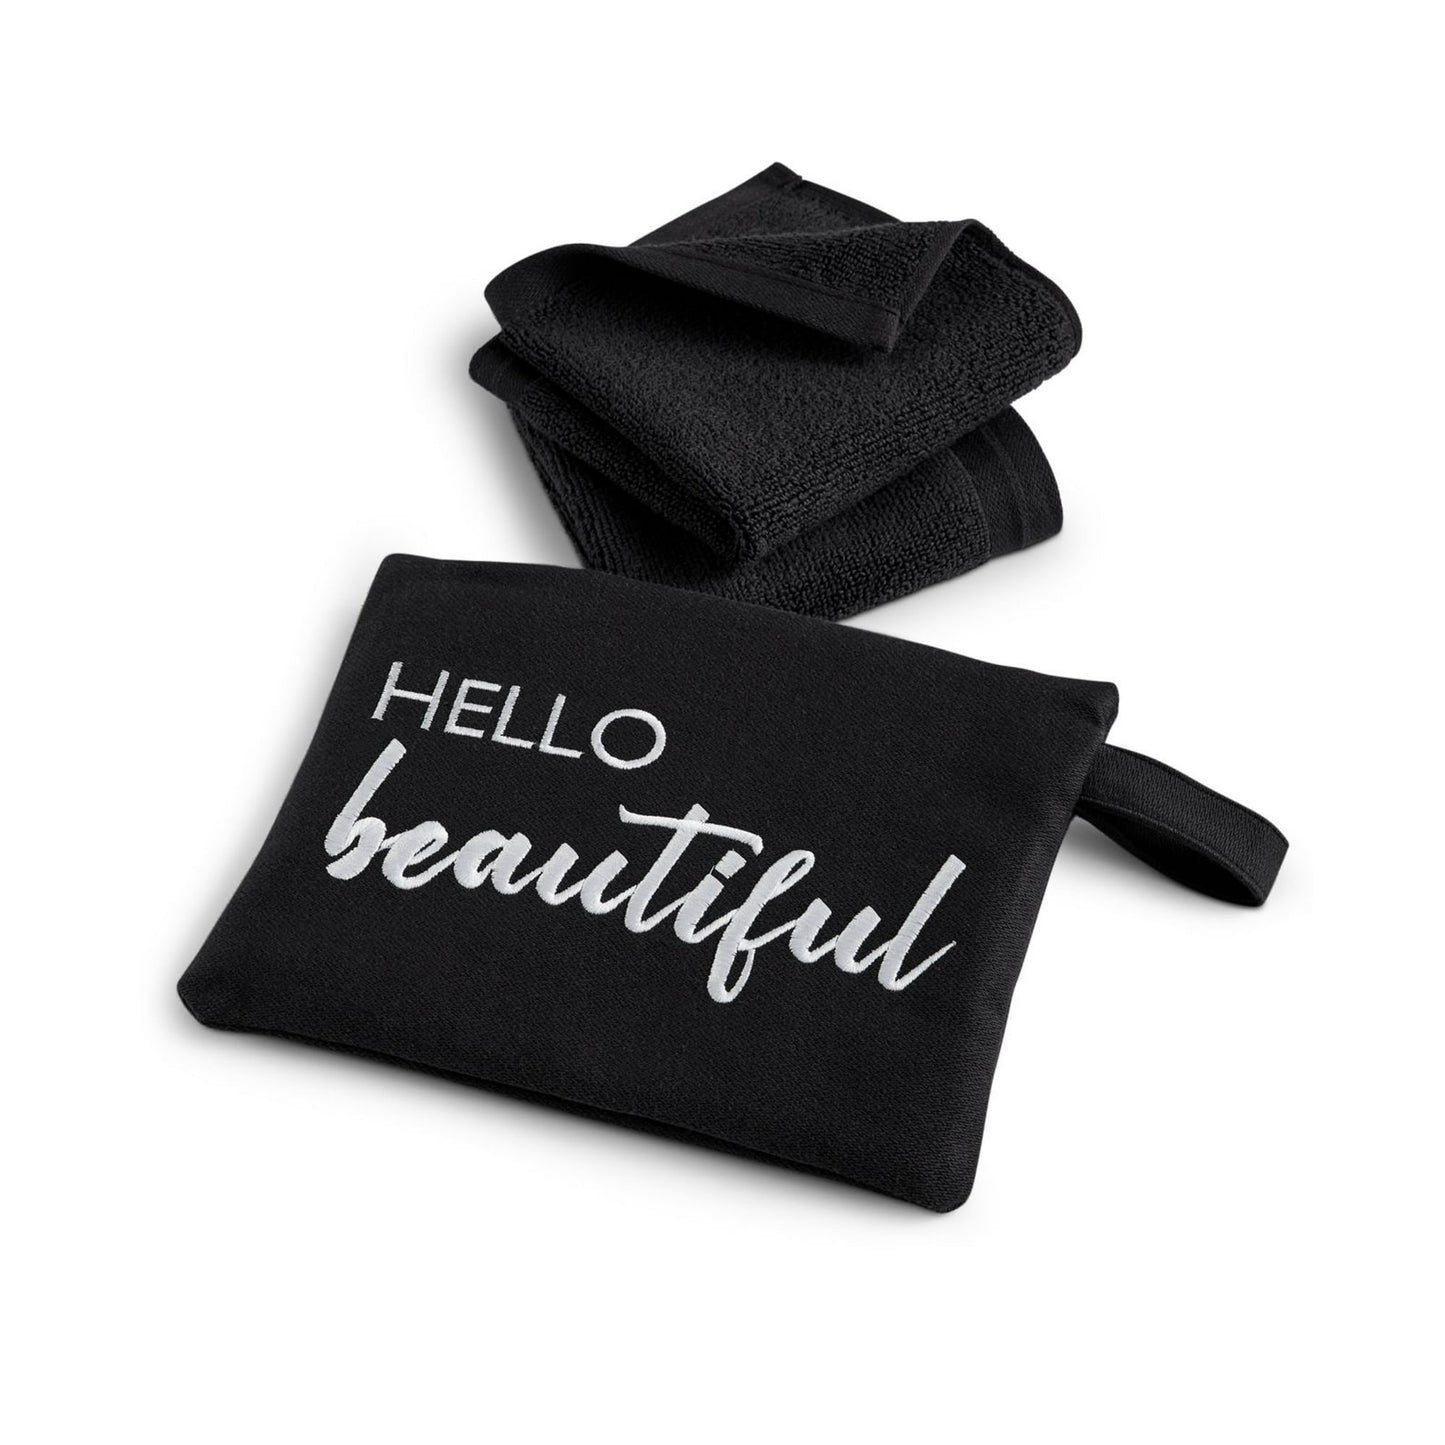 Charter Club Makeup Hello Beautiful Towel Gift Sets